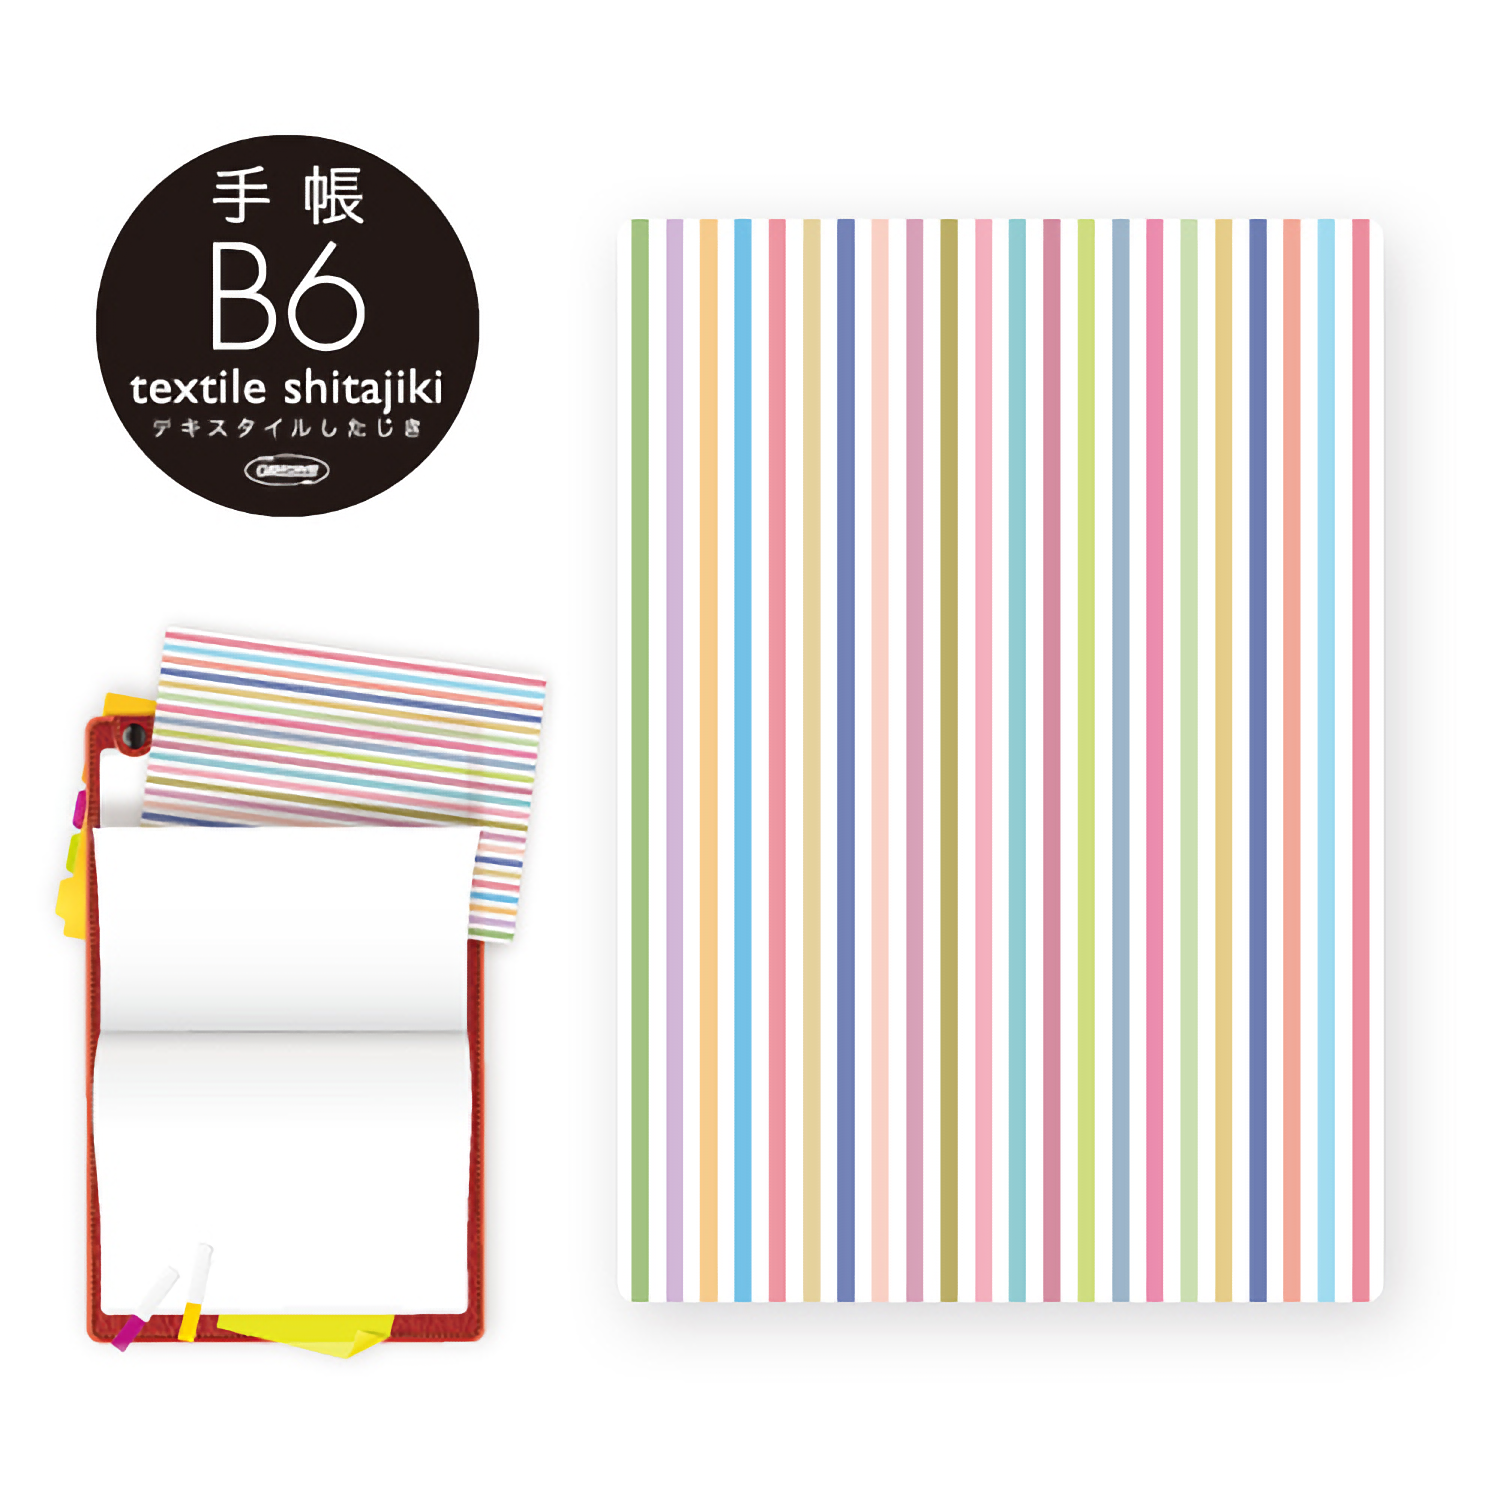 Kyoei Orions Shitajiki Pencil Board B6 - Design 01